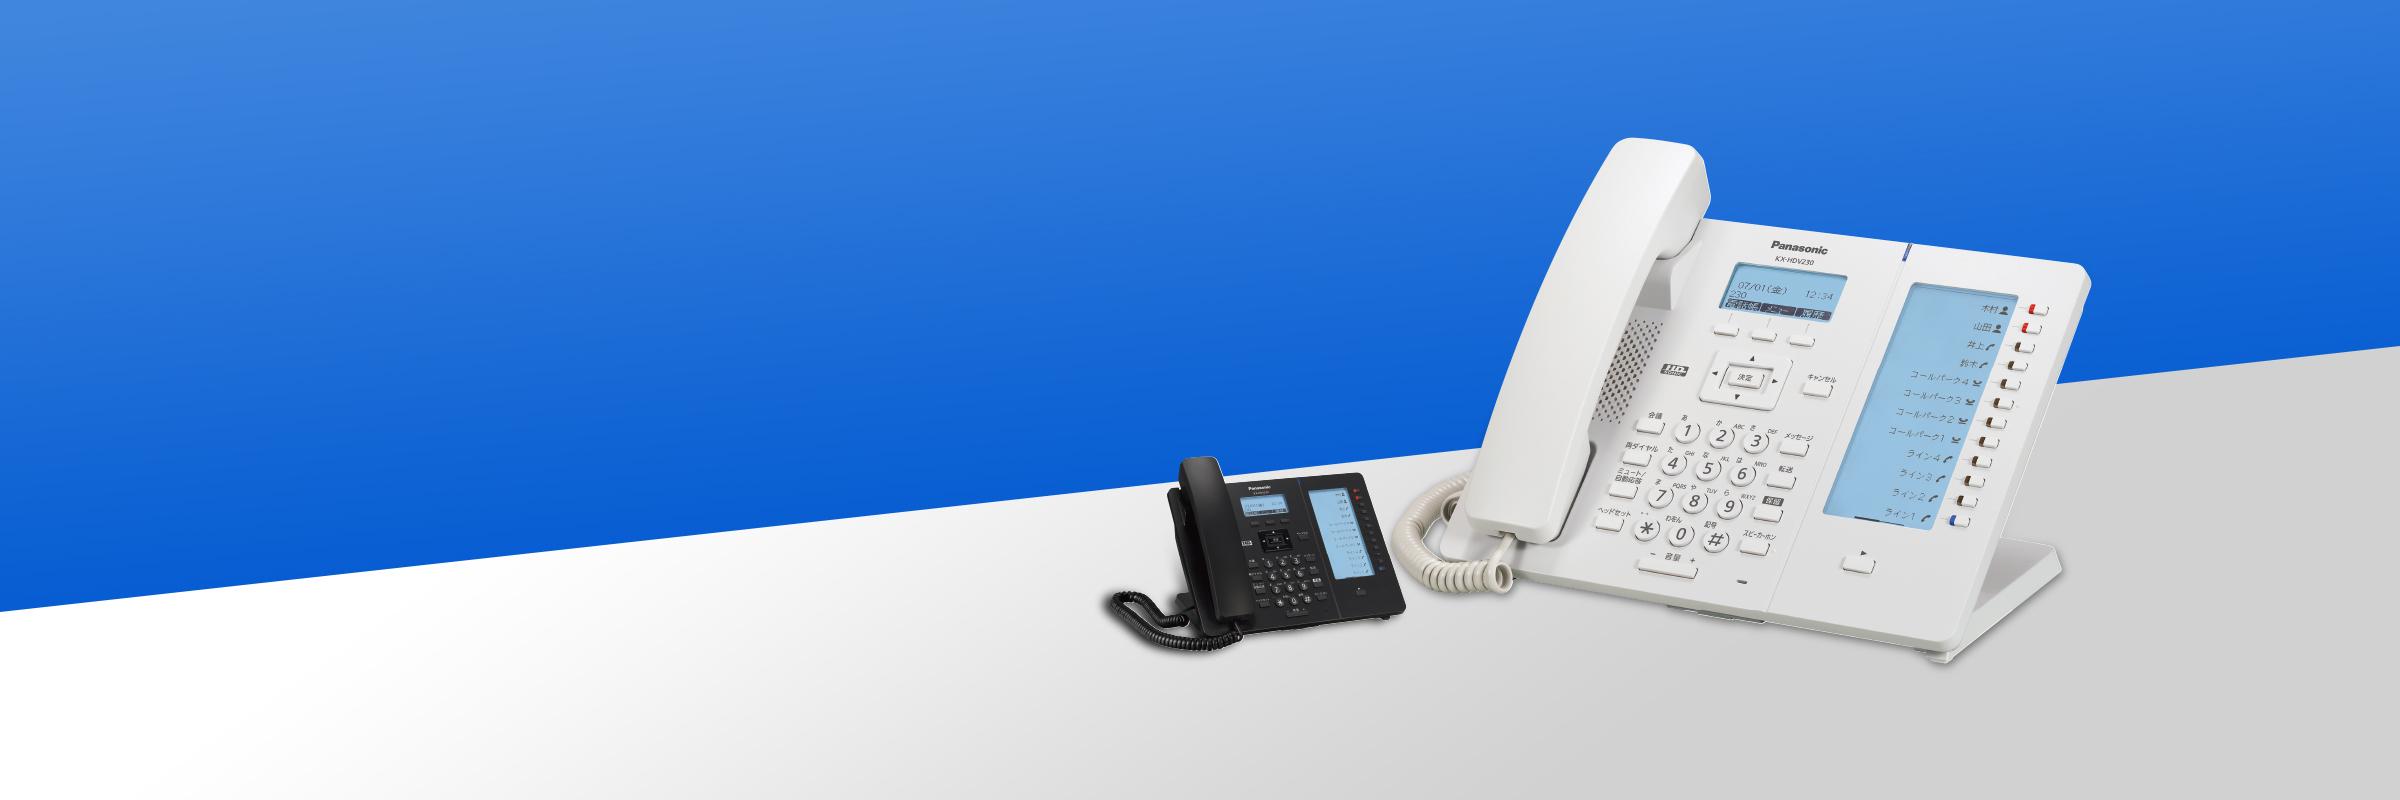 KX-HDV230N - ラインナップ - IP電話機 - 製品・サービス 